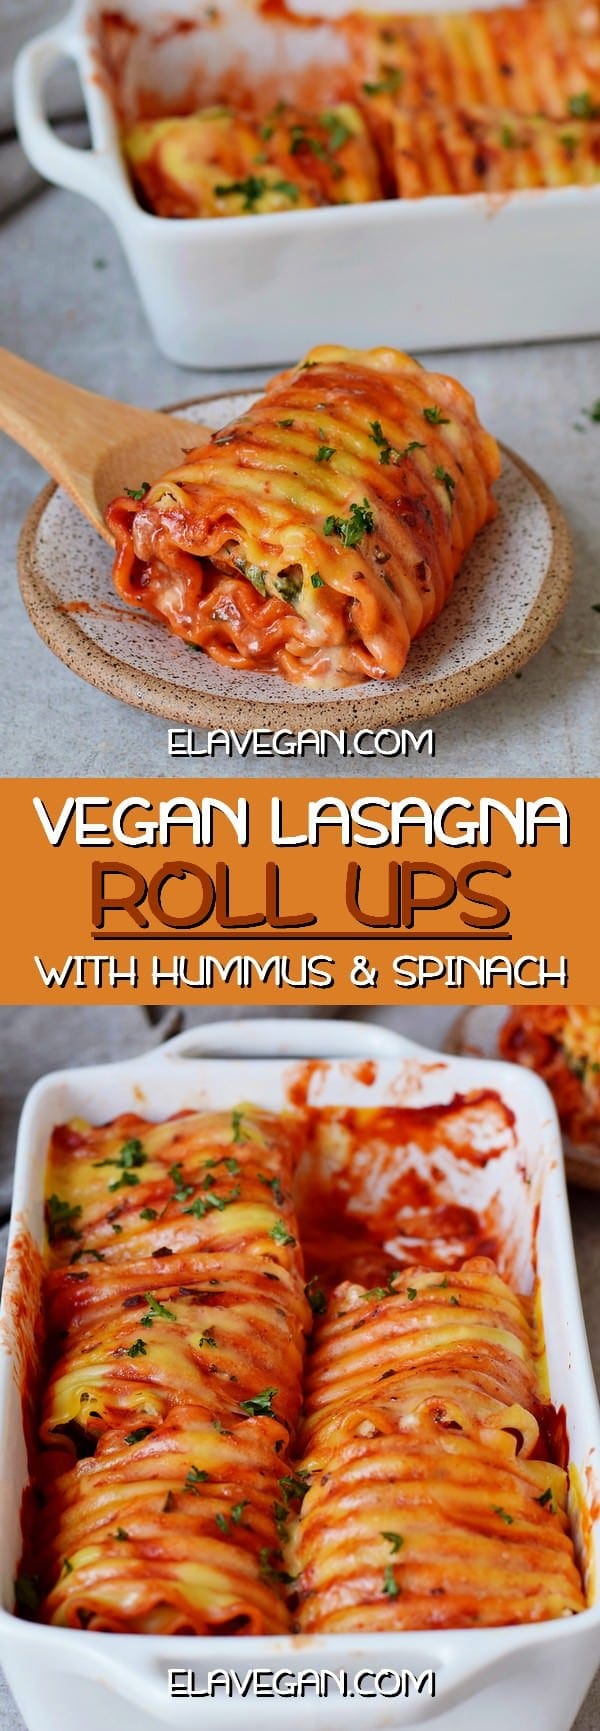 Vegan lasagna roll ups with hummus